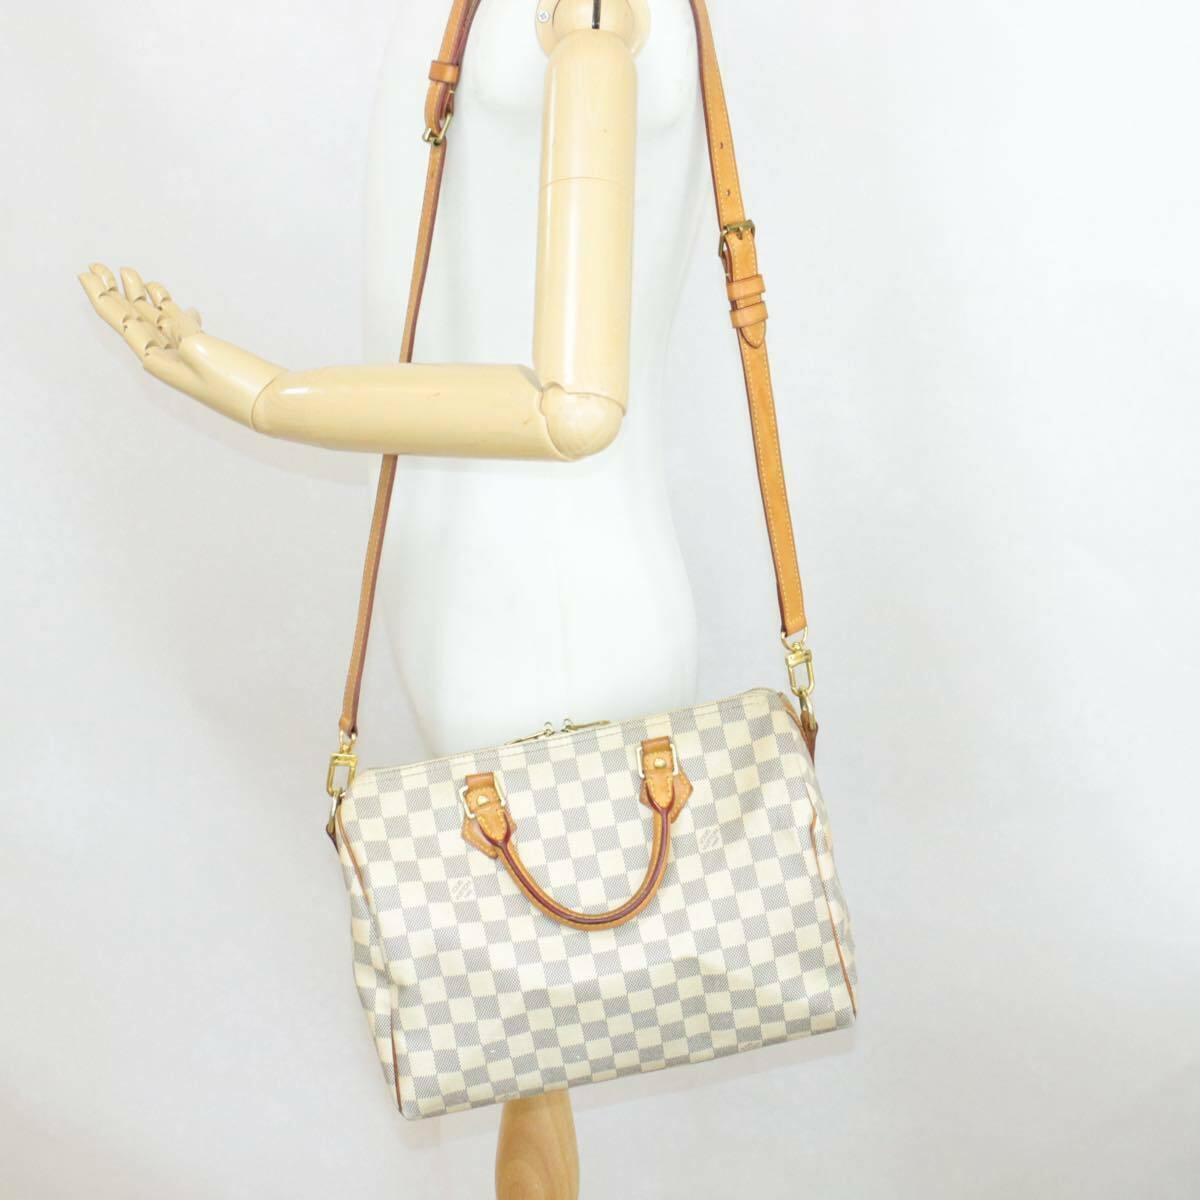 Louis Vuitton Damier Azur Speedy Bandouliere 30 Handbag Shoulder Bag N